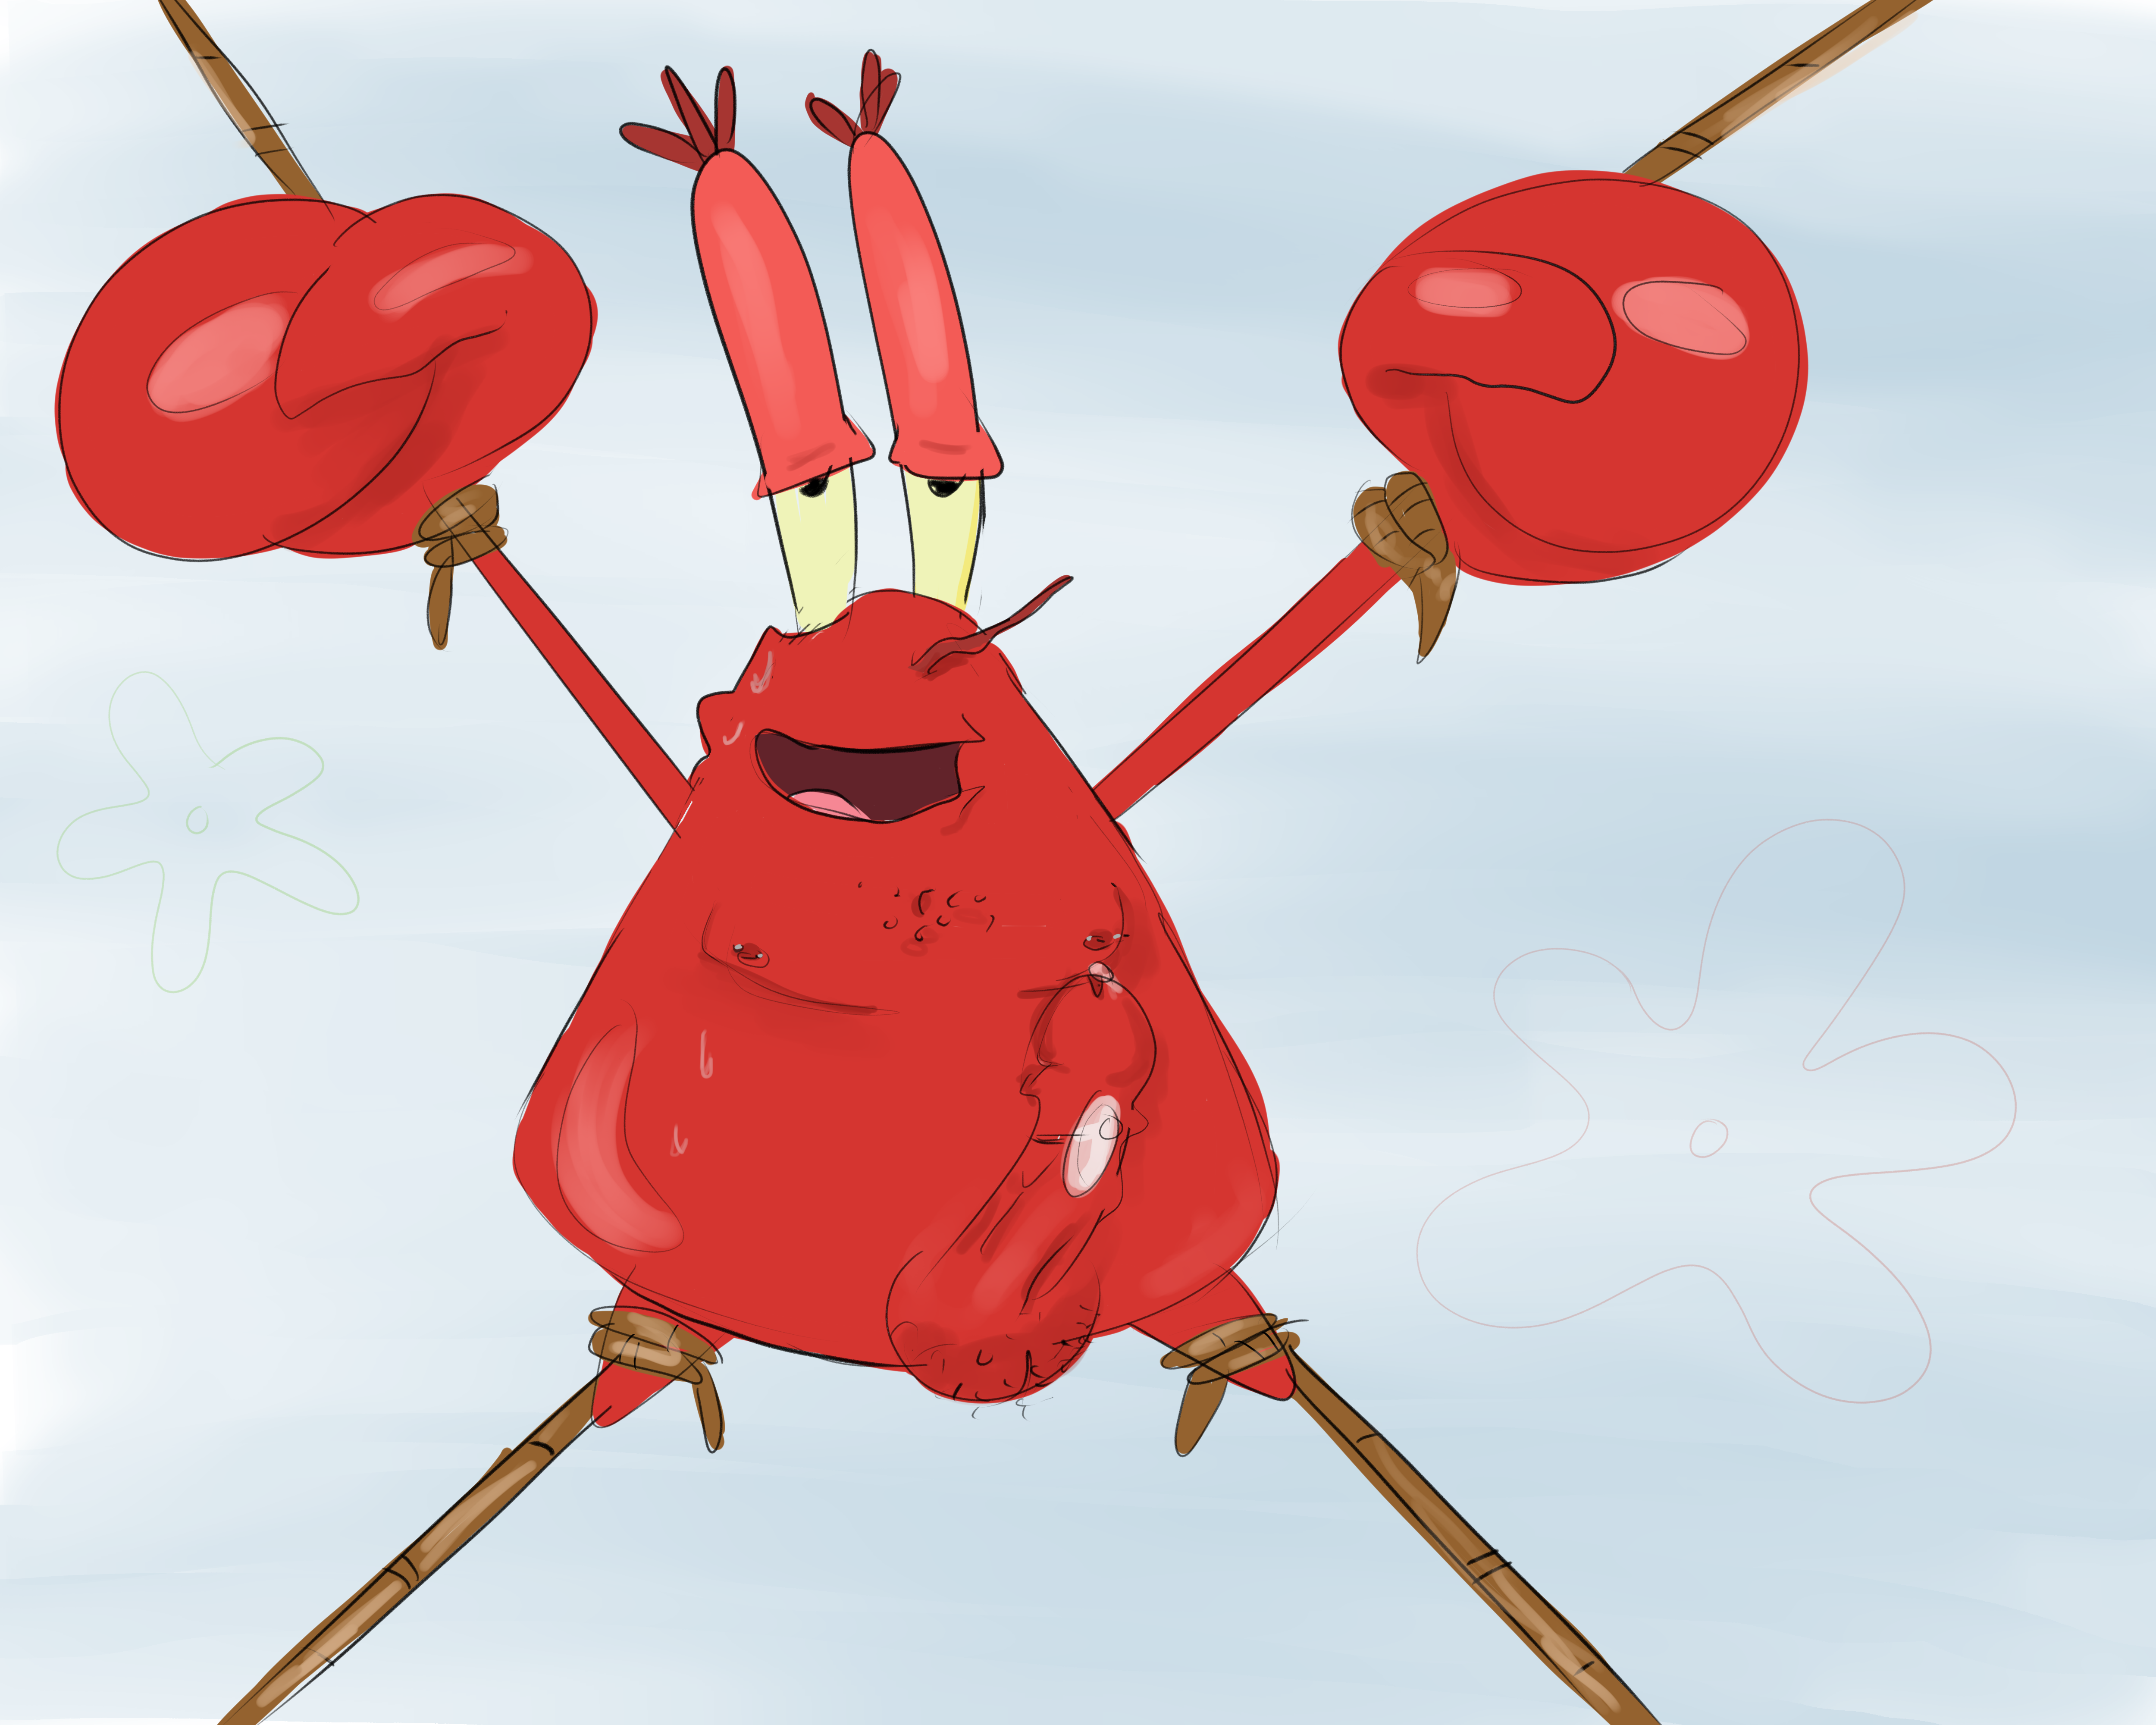 mr krabs, nickelodeon, spongebob squarepants, bondage, crab, crustacean.